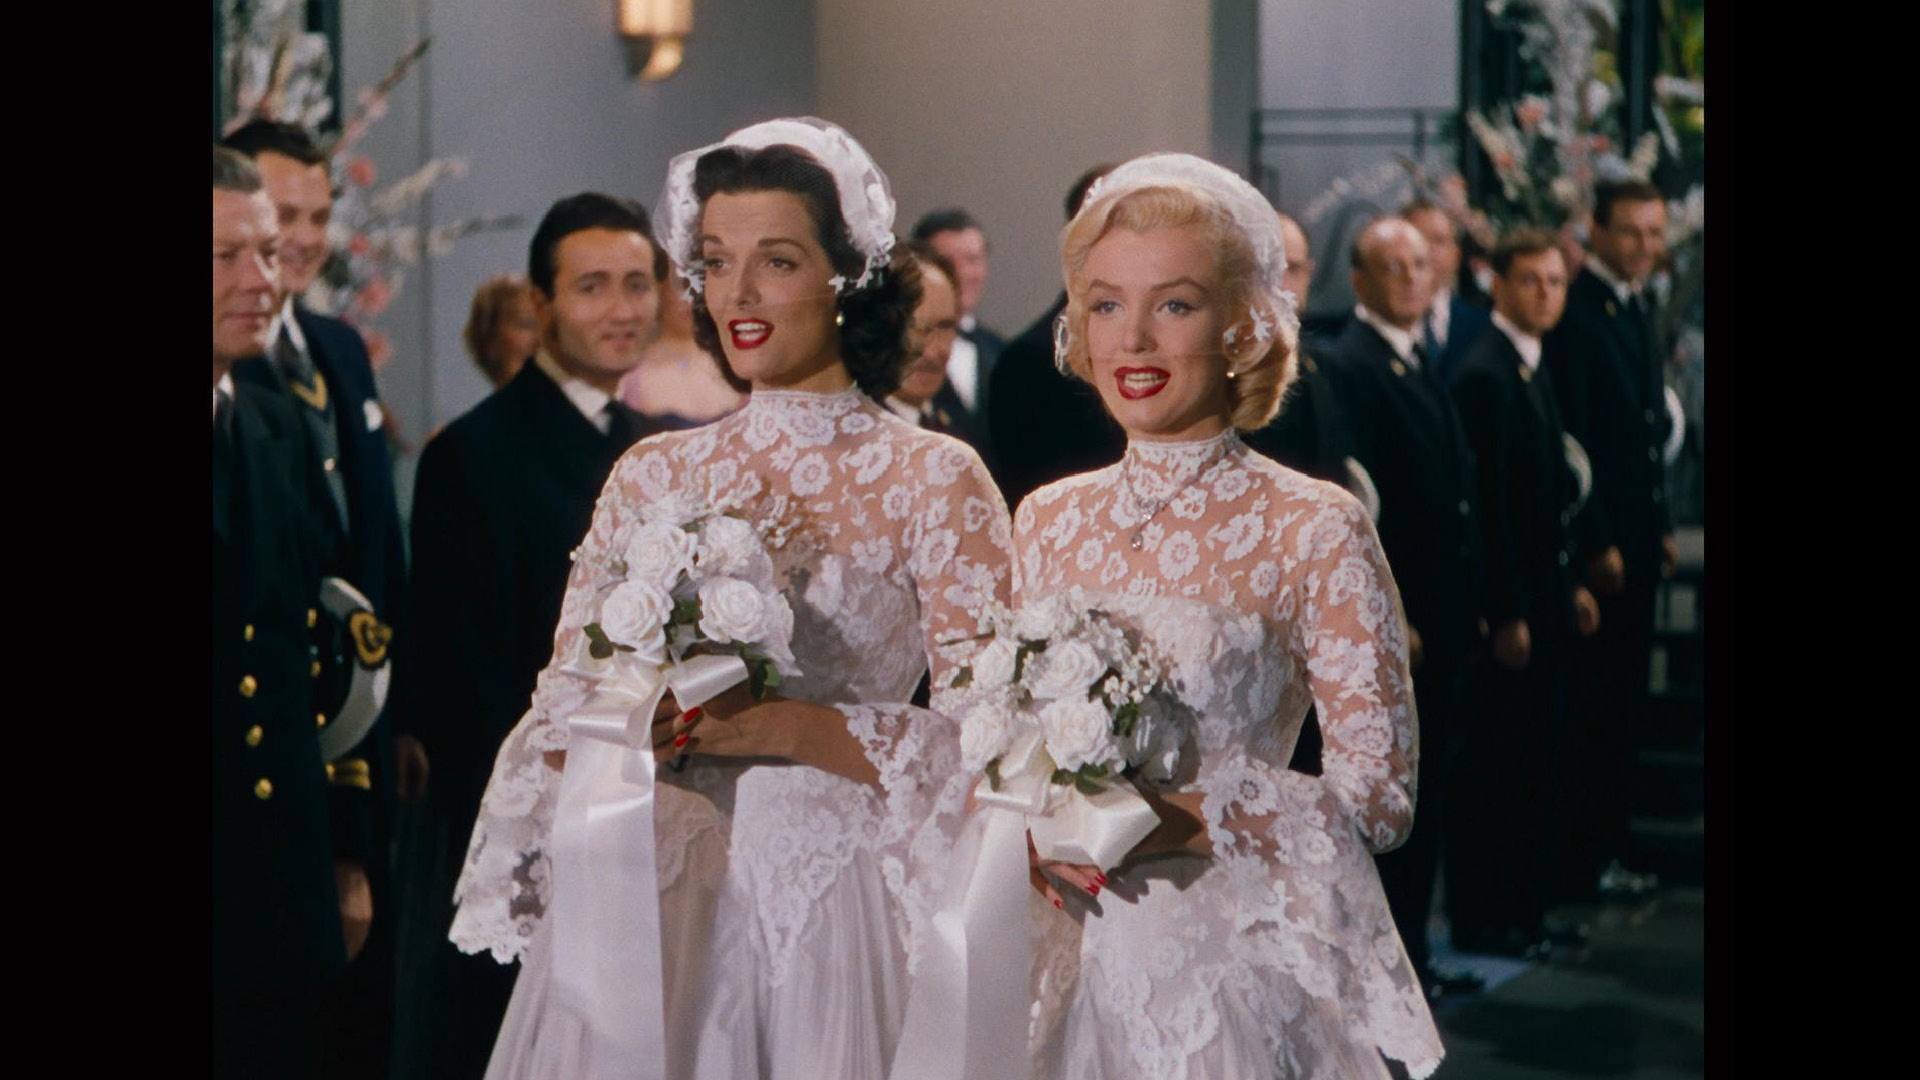 GENTLEMEN PREFER BLONDES film still Marilyn Monroe and Jane Russell